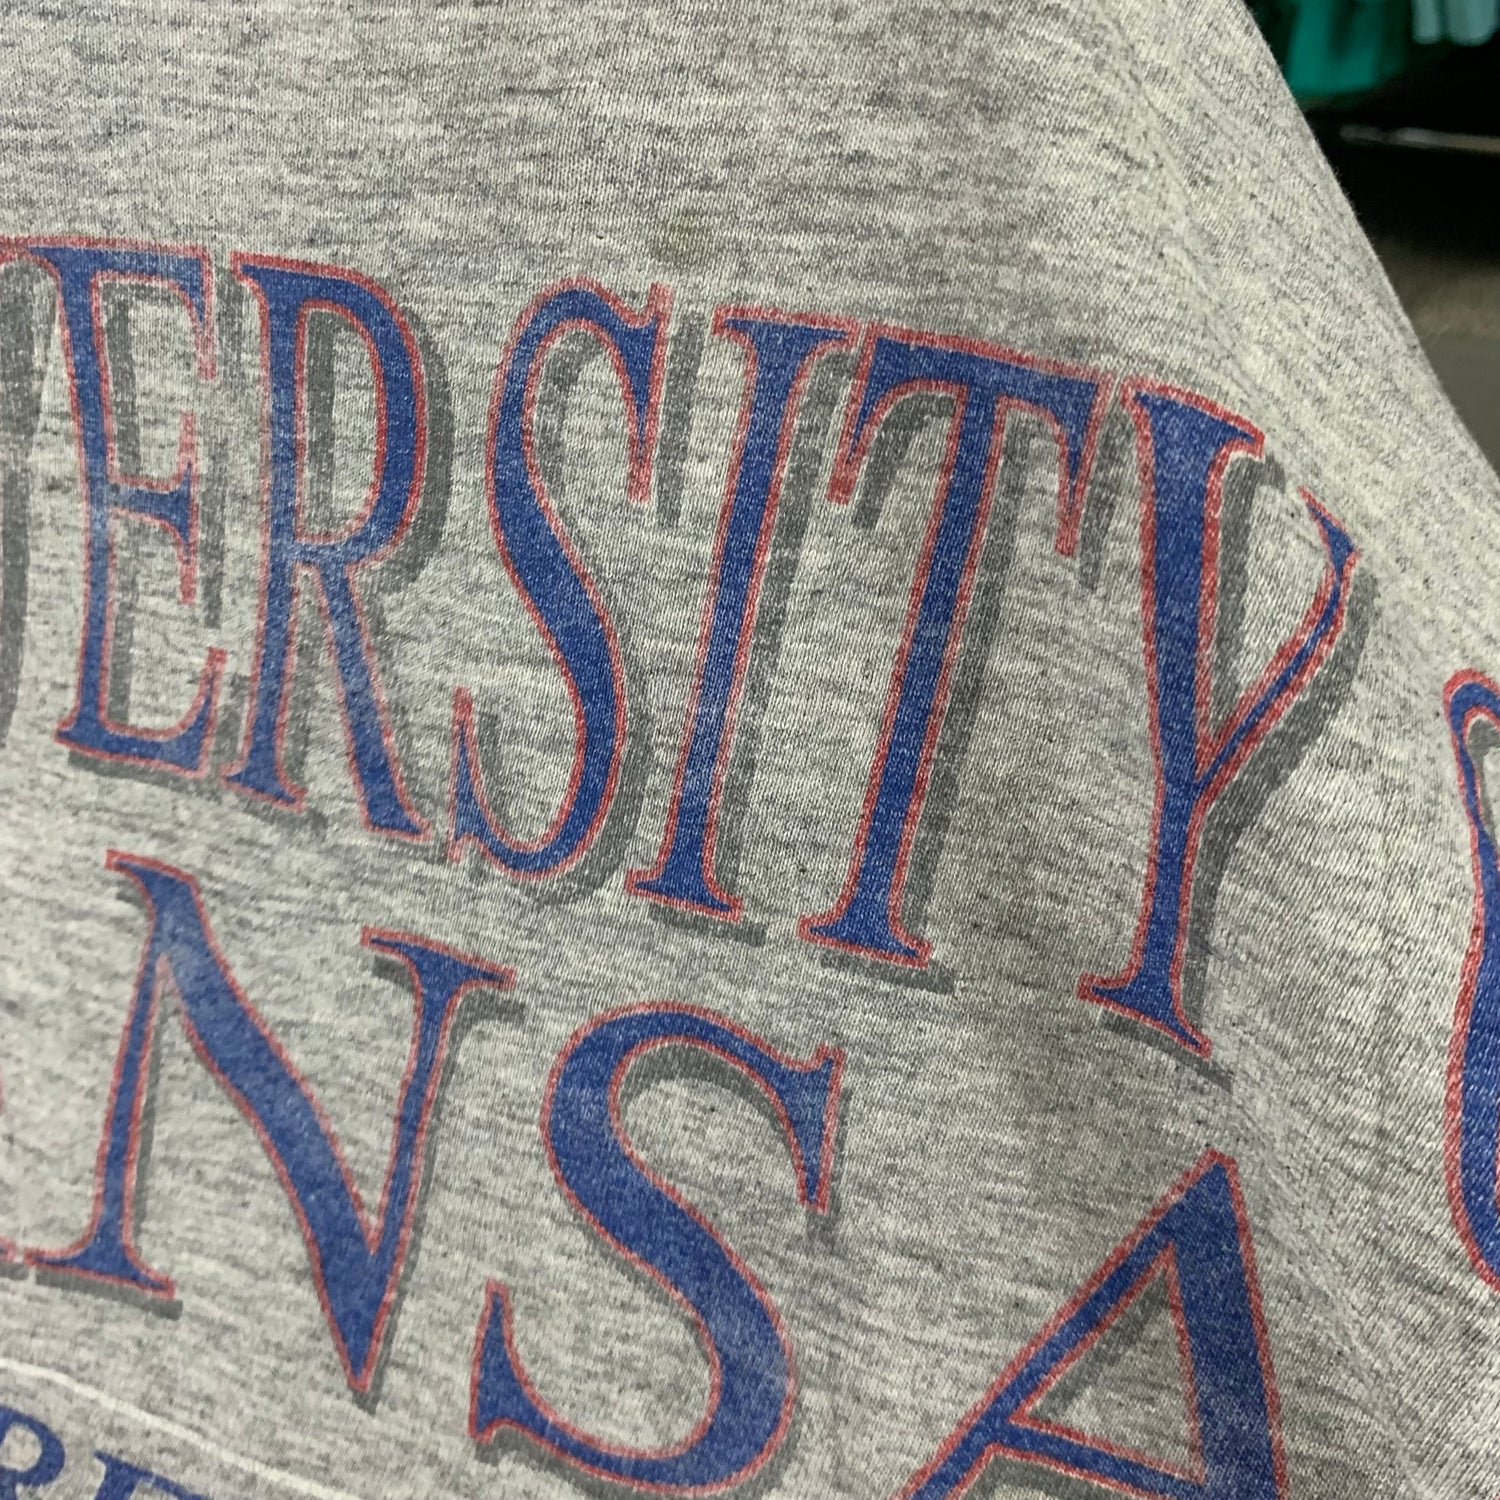 Vintage 1990s University of Kansas T-shirt size XL